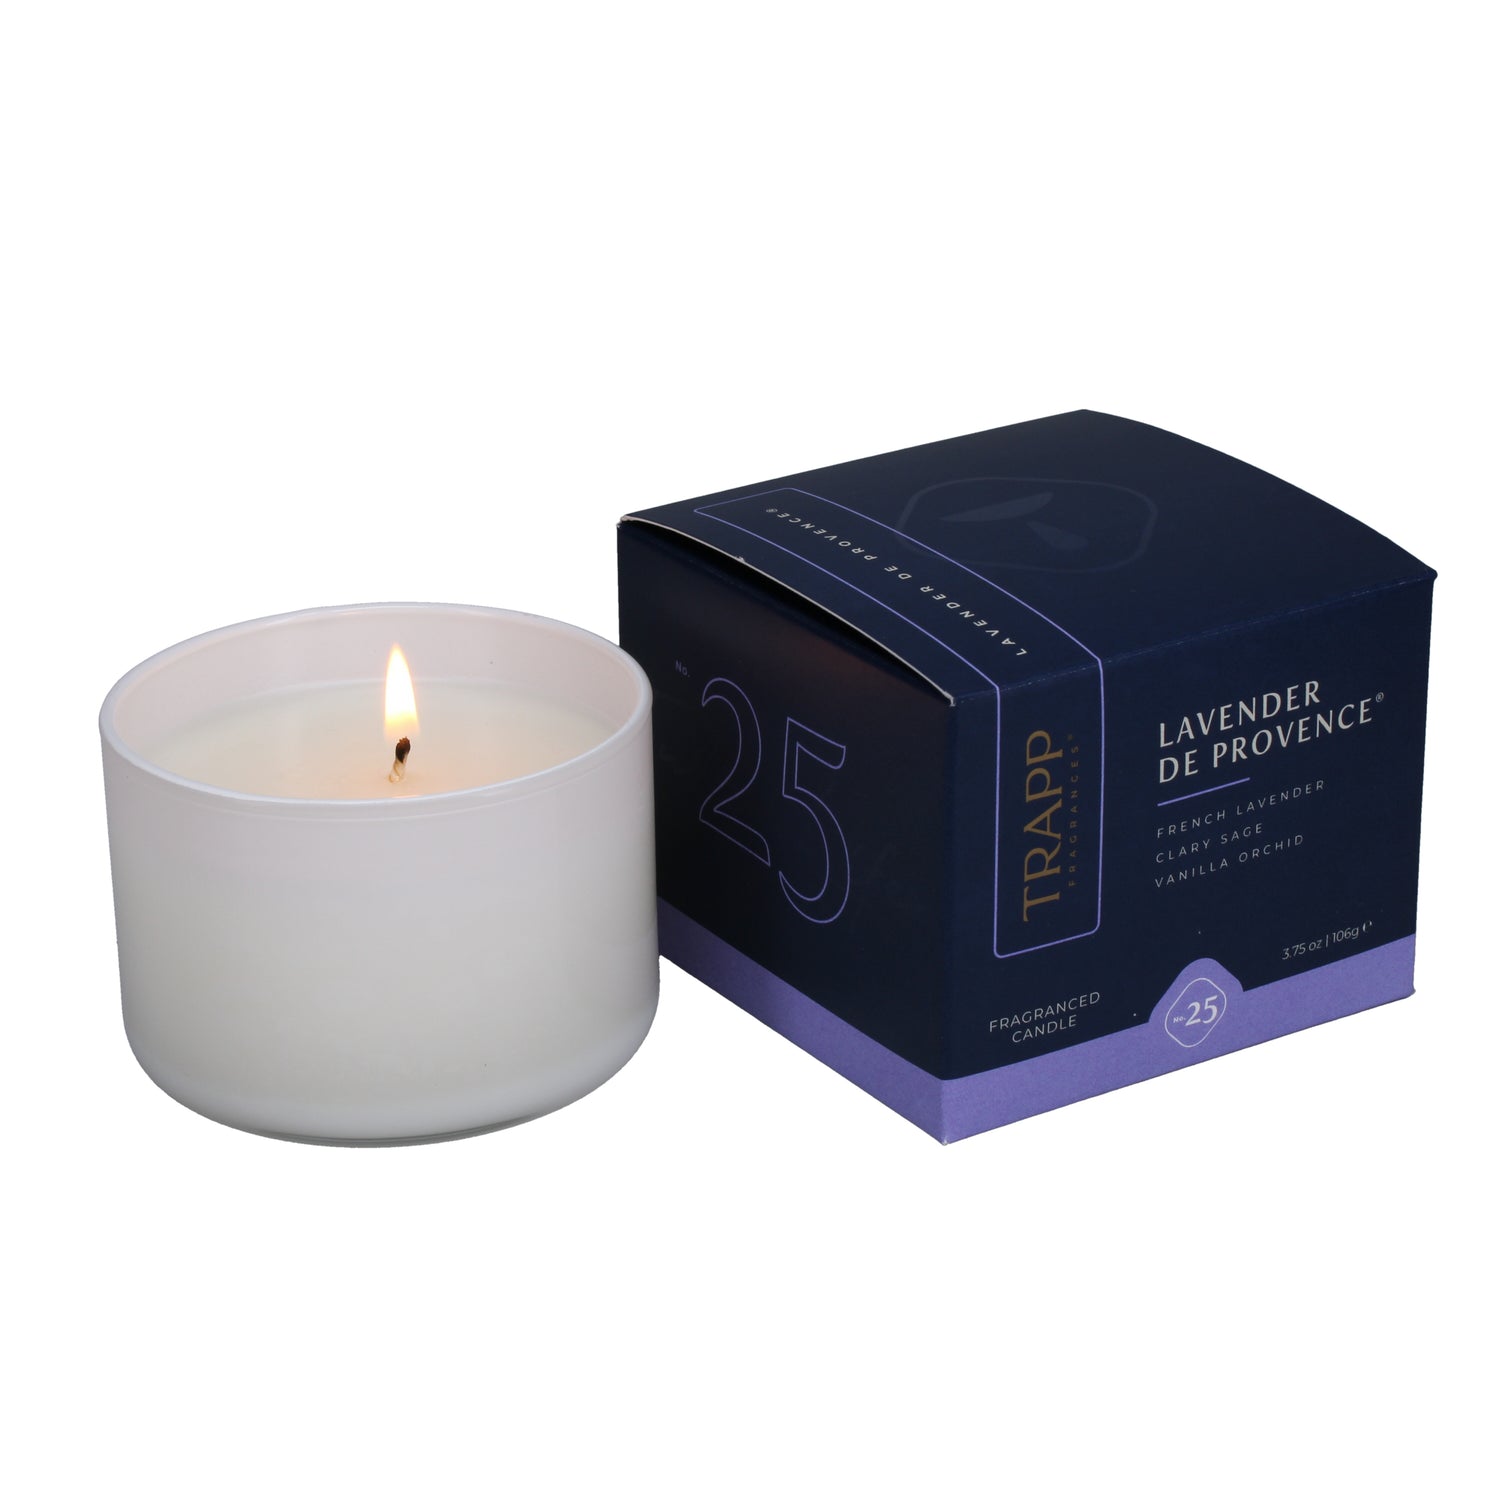 No. 25 Lavender de Provence 3.75 oz. Small Poured Candle Image 2